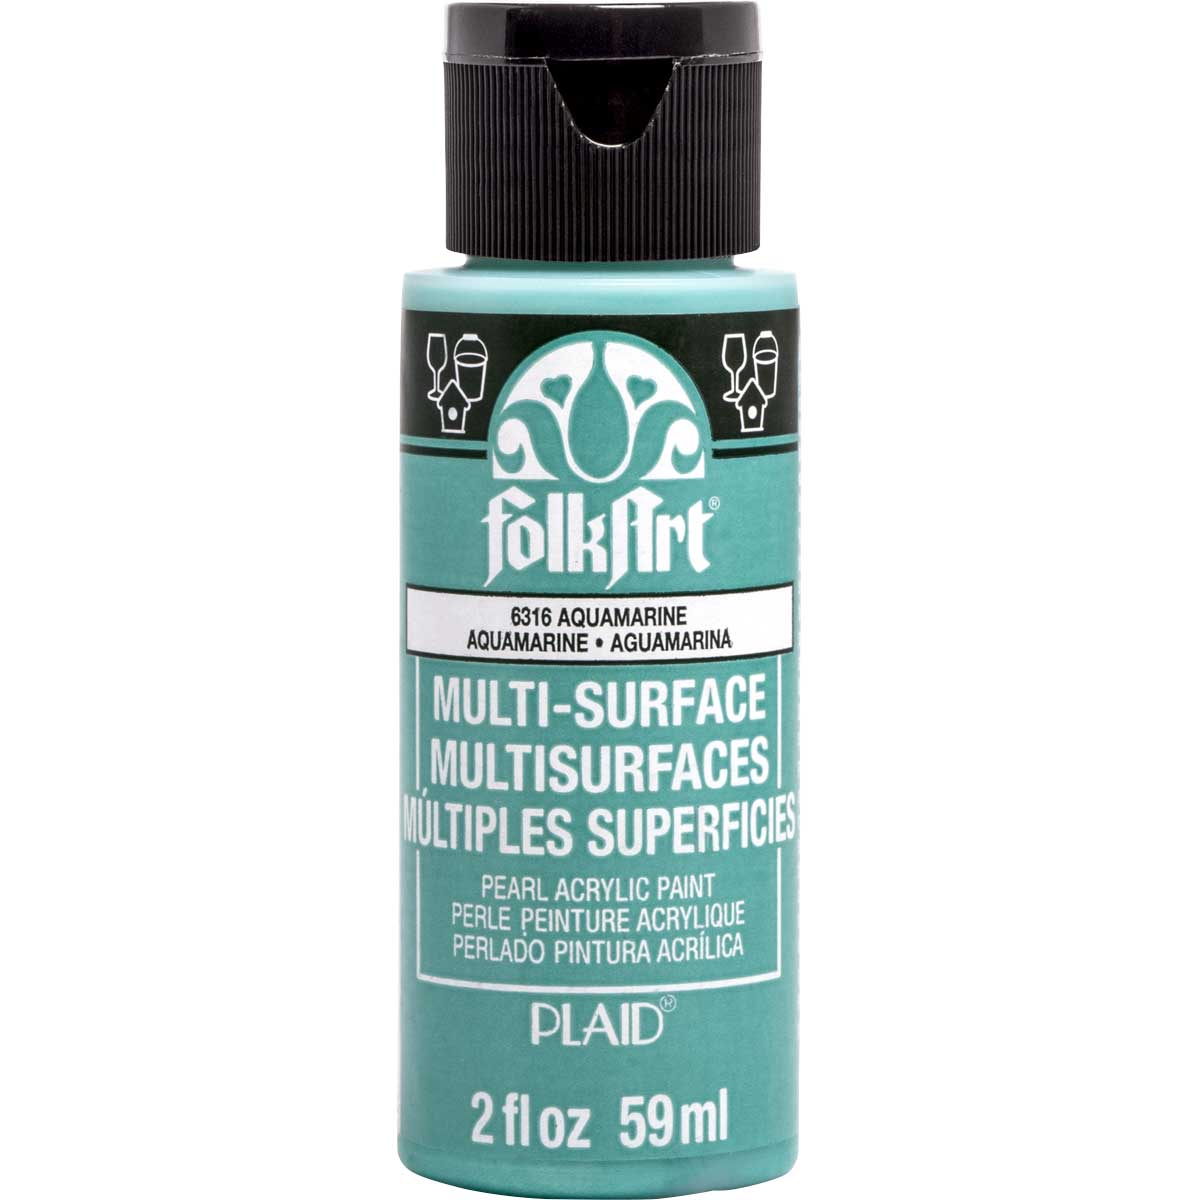 FolkArt ® Multi-Surface Pearl Acrylic Paints - Aquamarine, 2 oz. - 6316